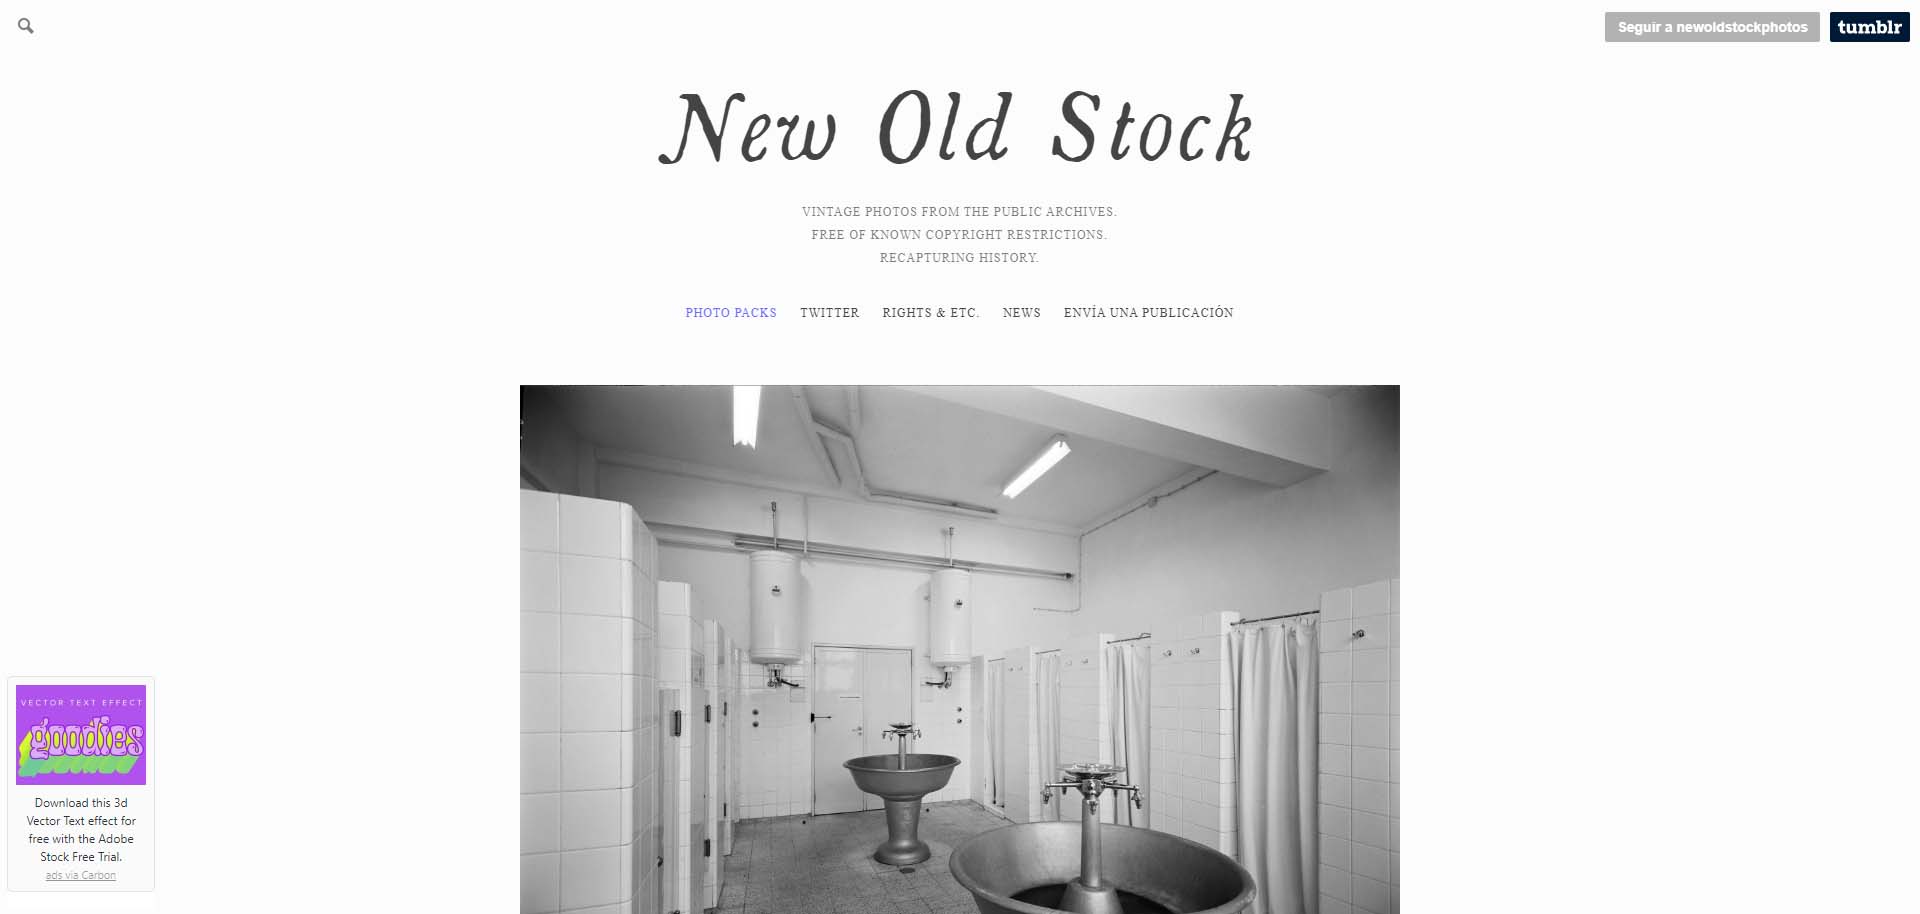 Blog-banco-imagenes - New Old Stock